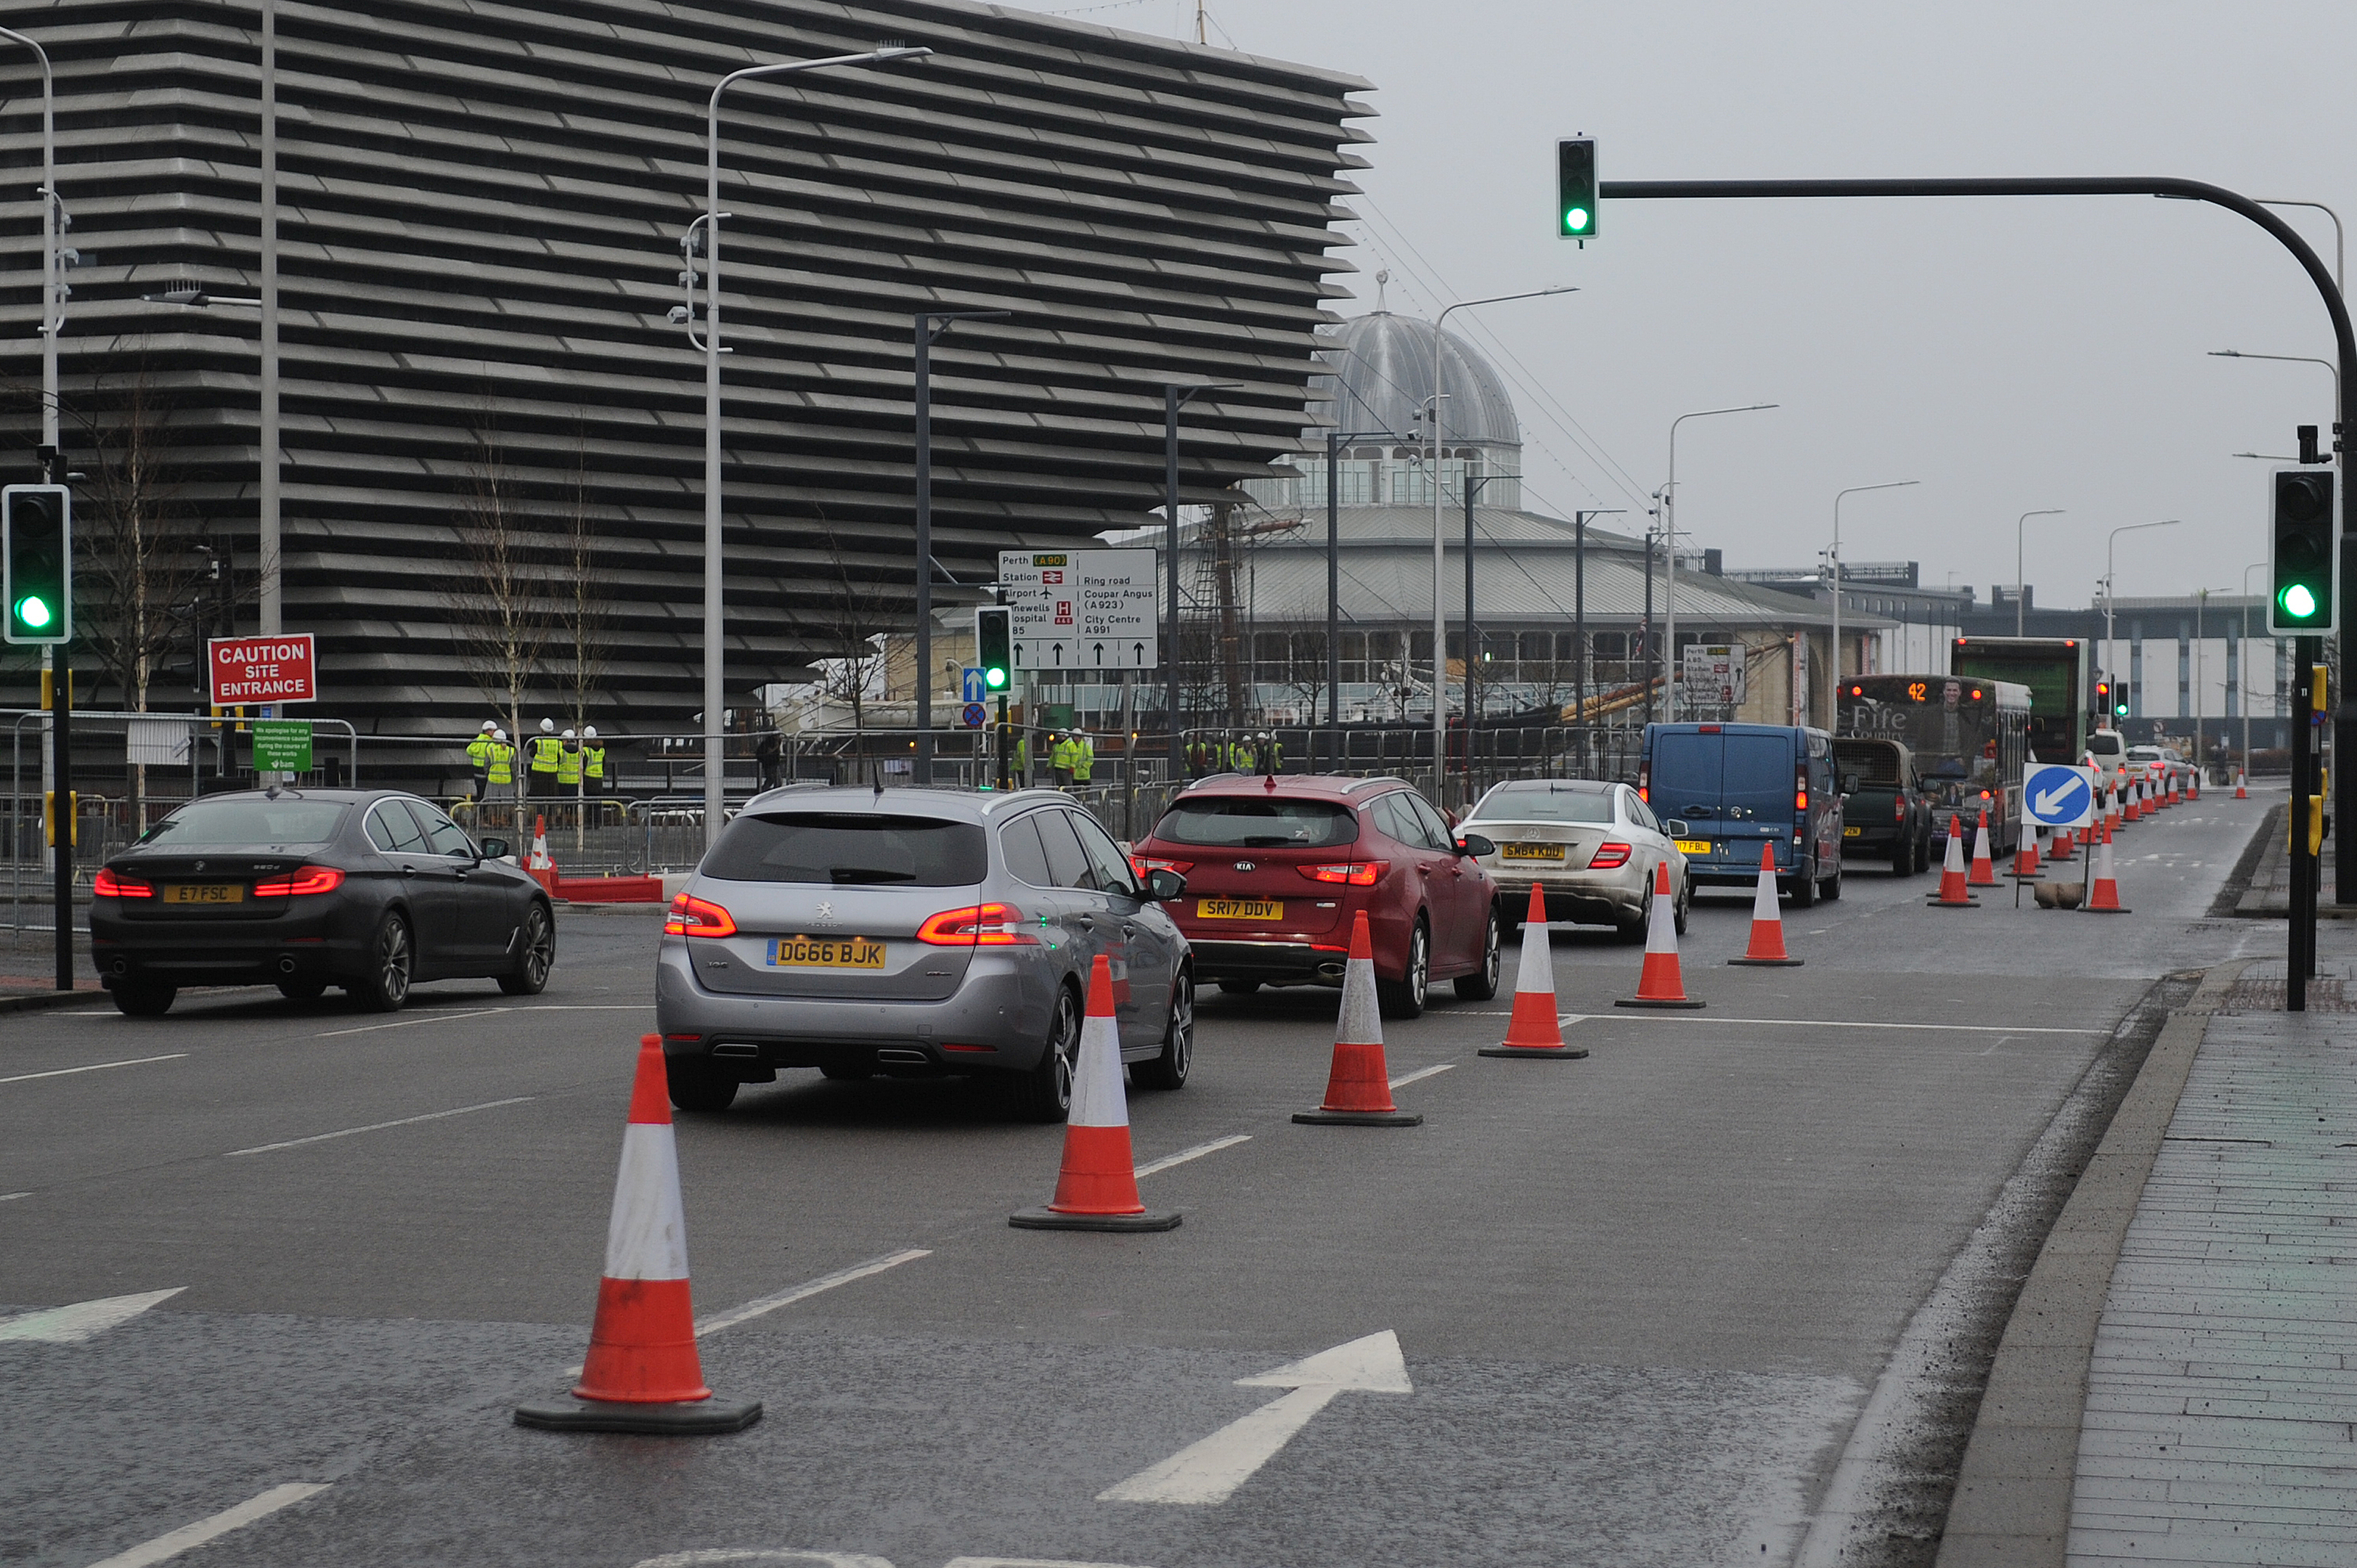 Traffic negotiating the lane closure near Slessor Gardens.